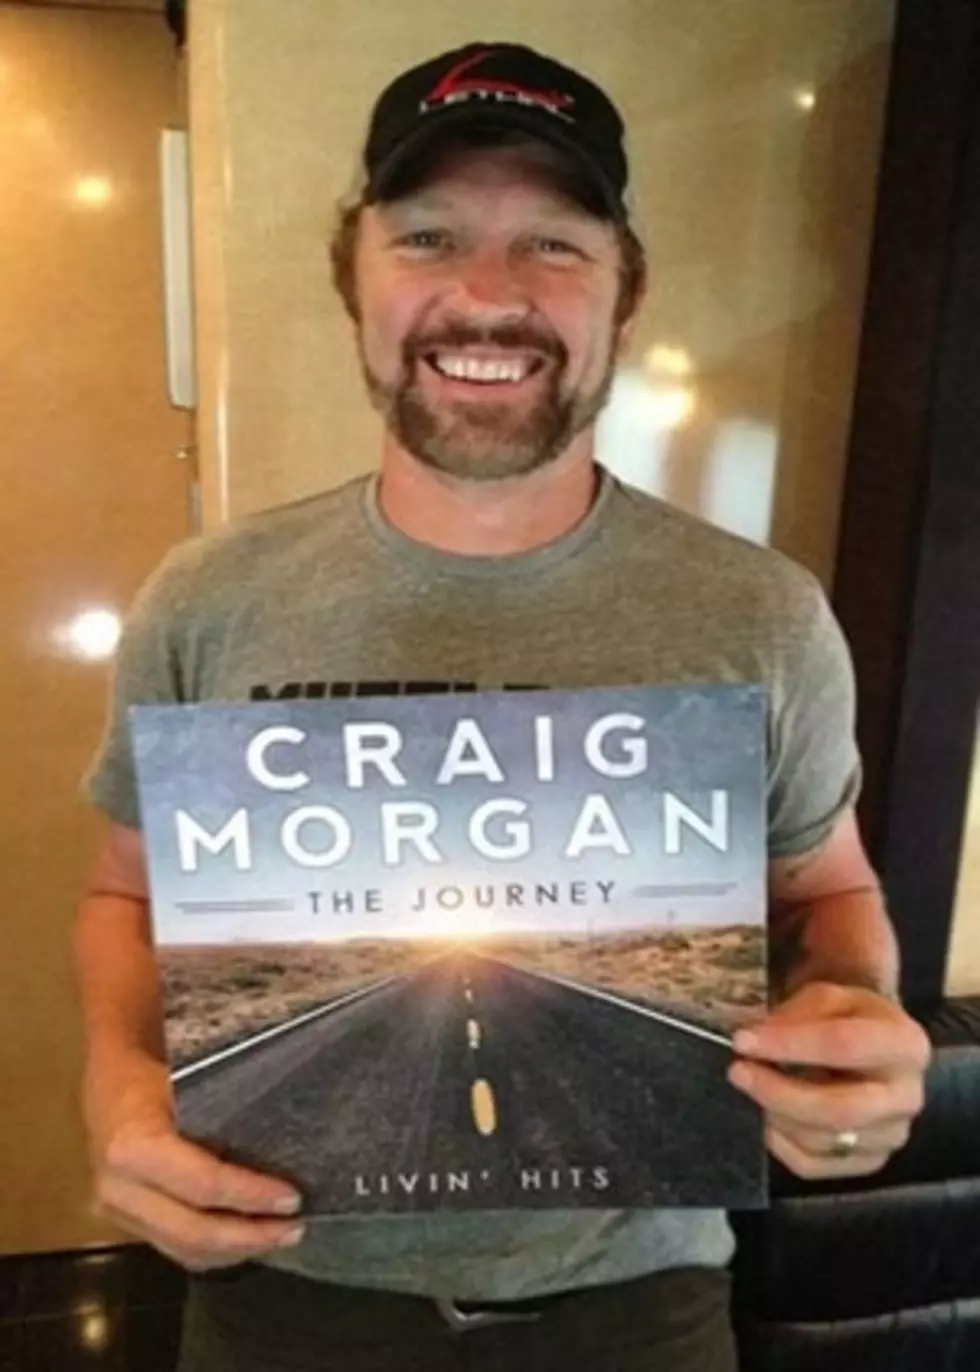 Craig Morgan Reveals Release Date, Cover Art For New Album